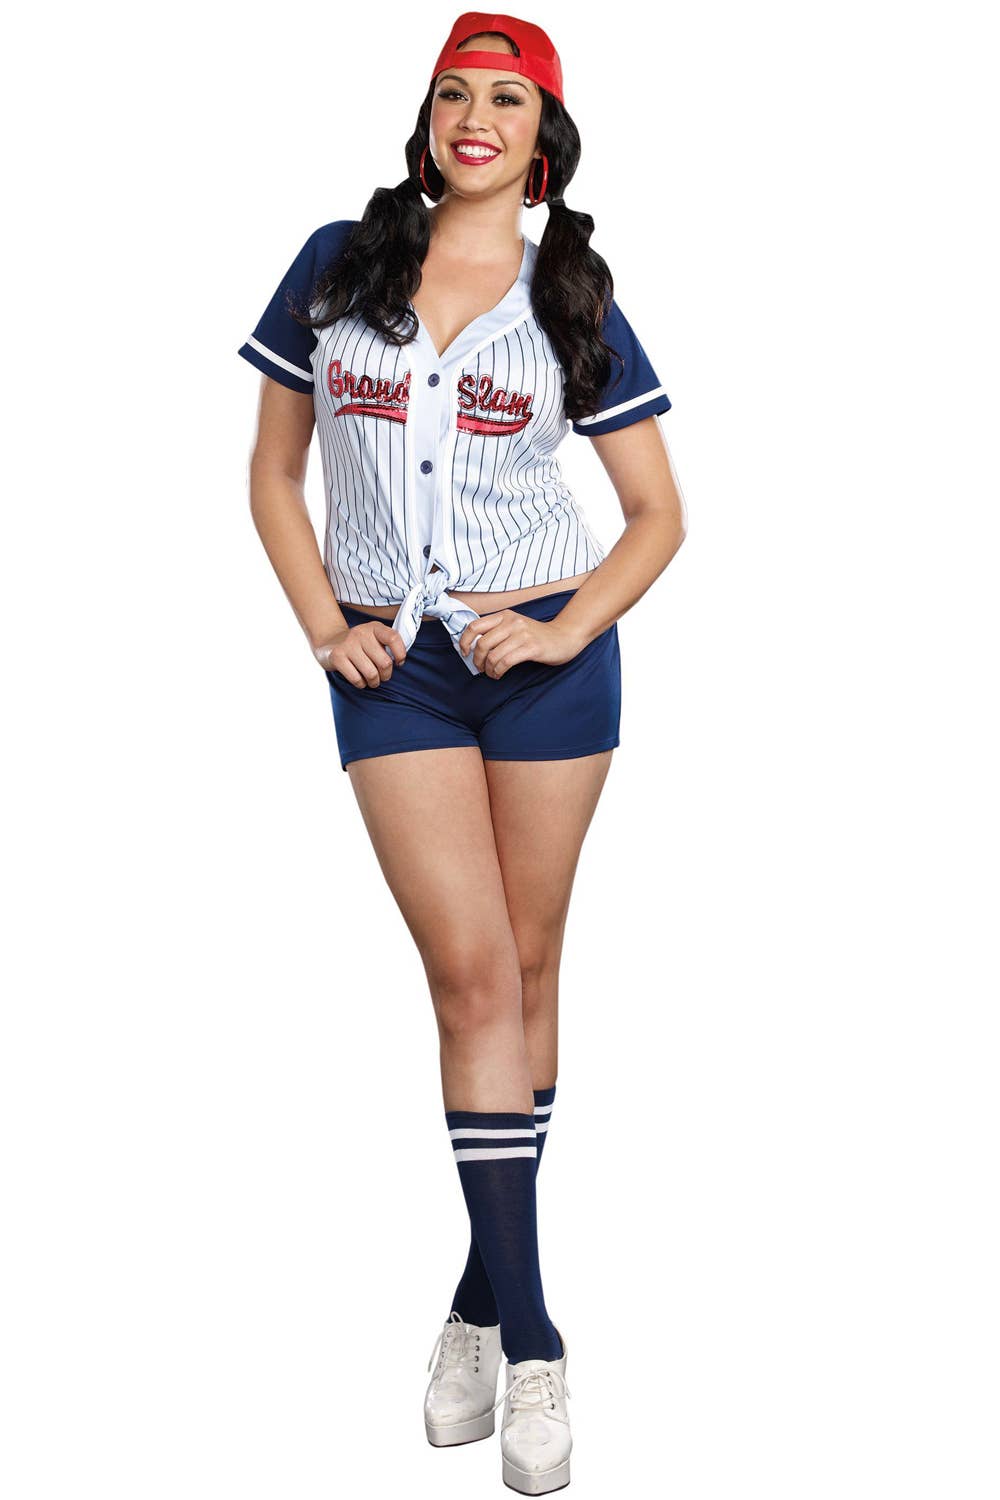 Women's Plus Size Baseball Uniform Costume - Front Image